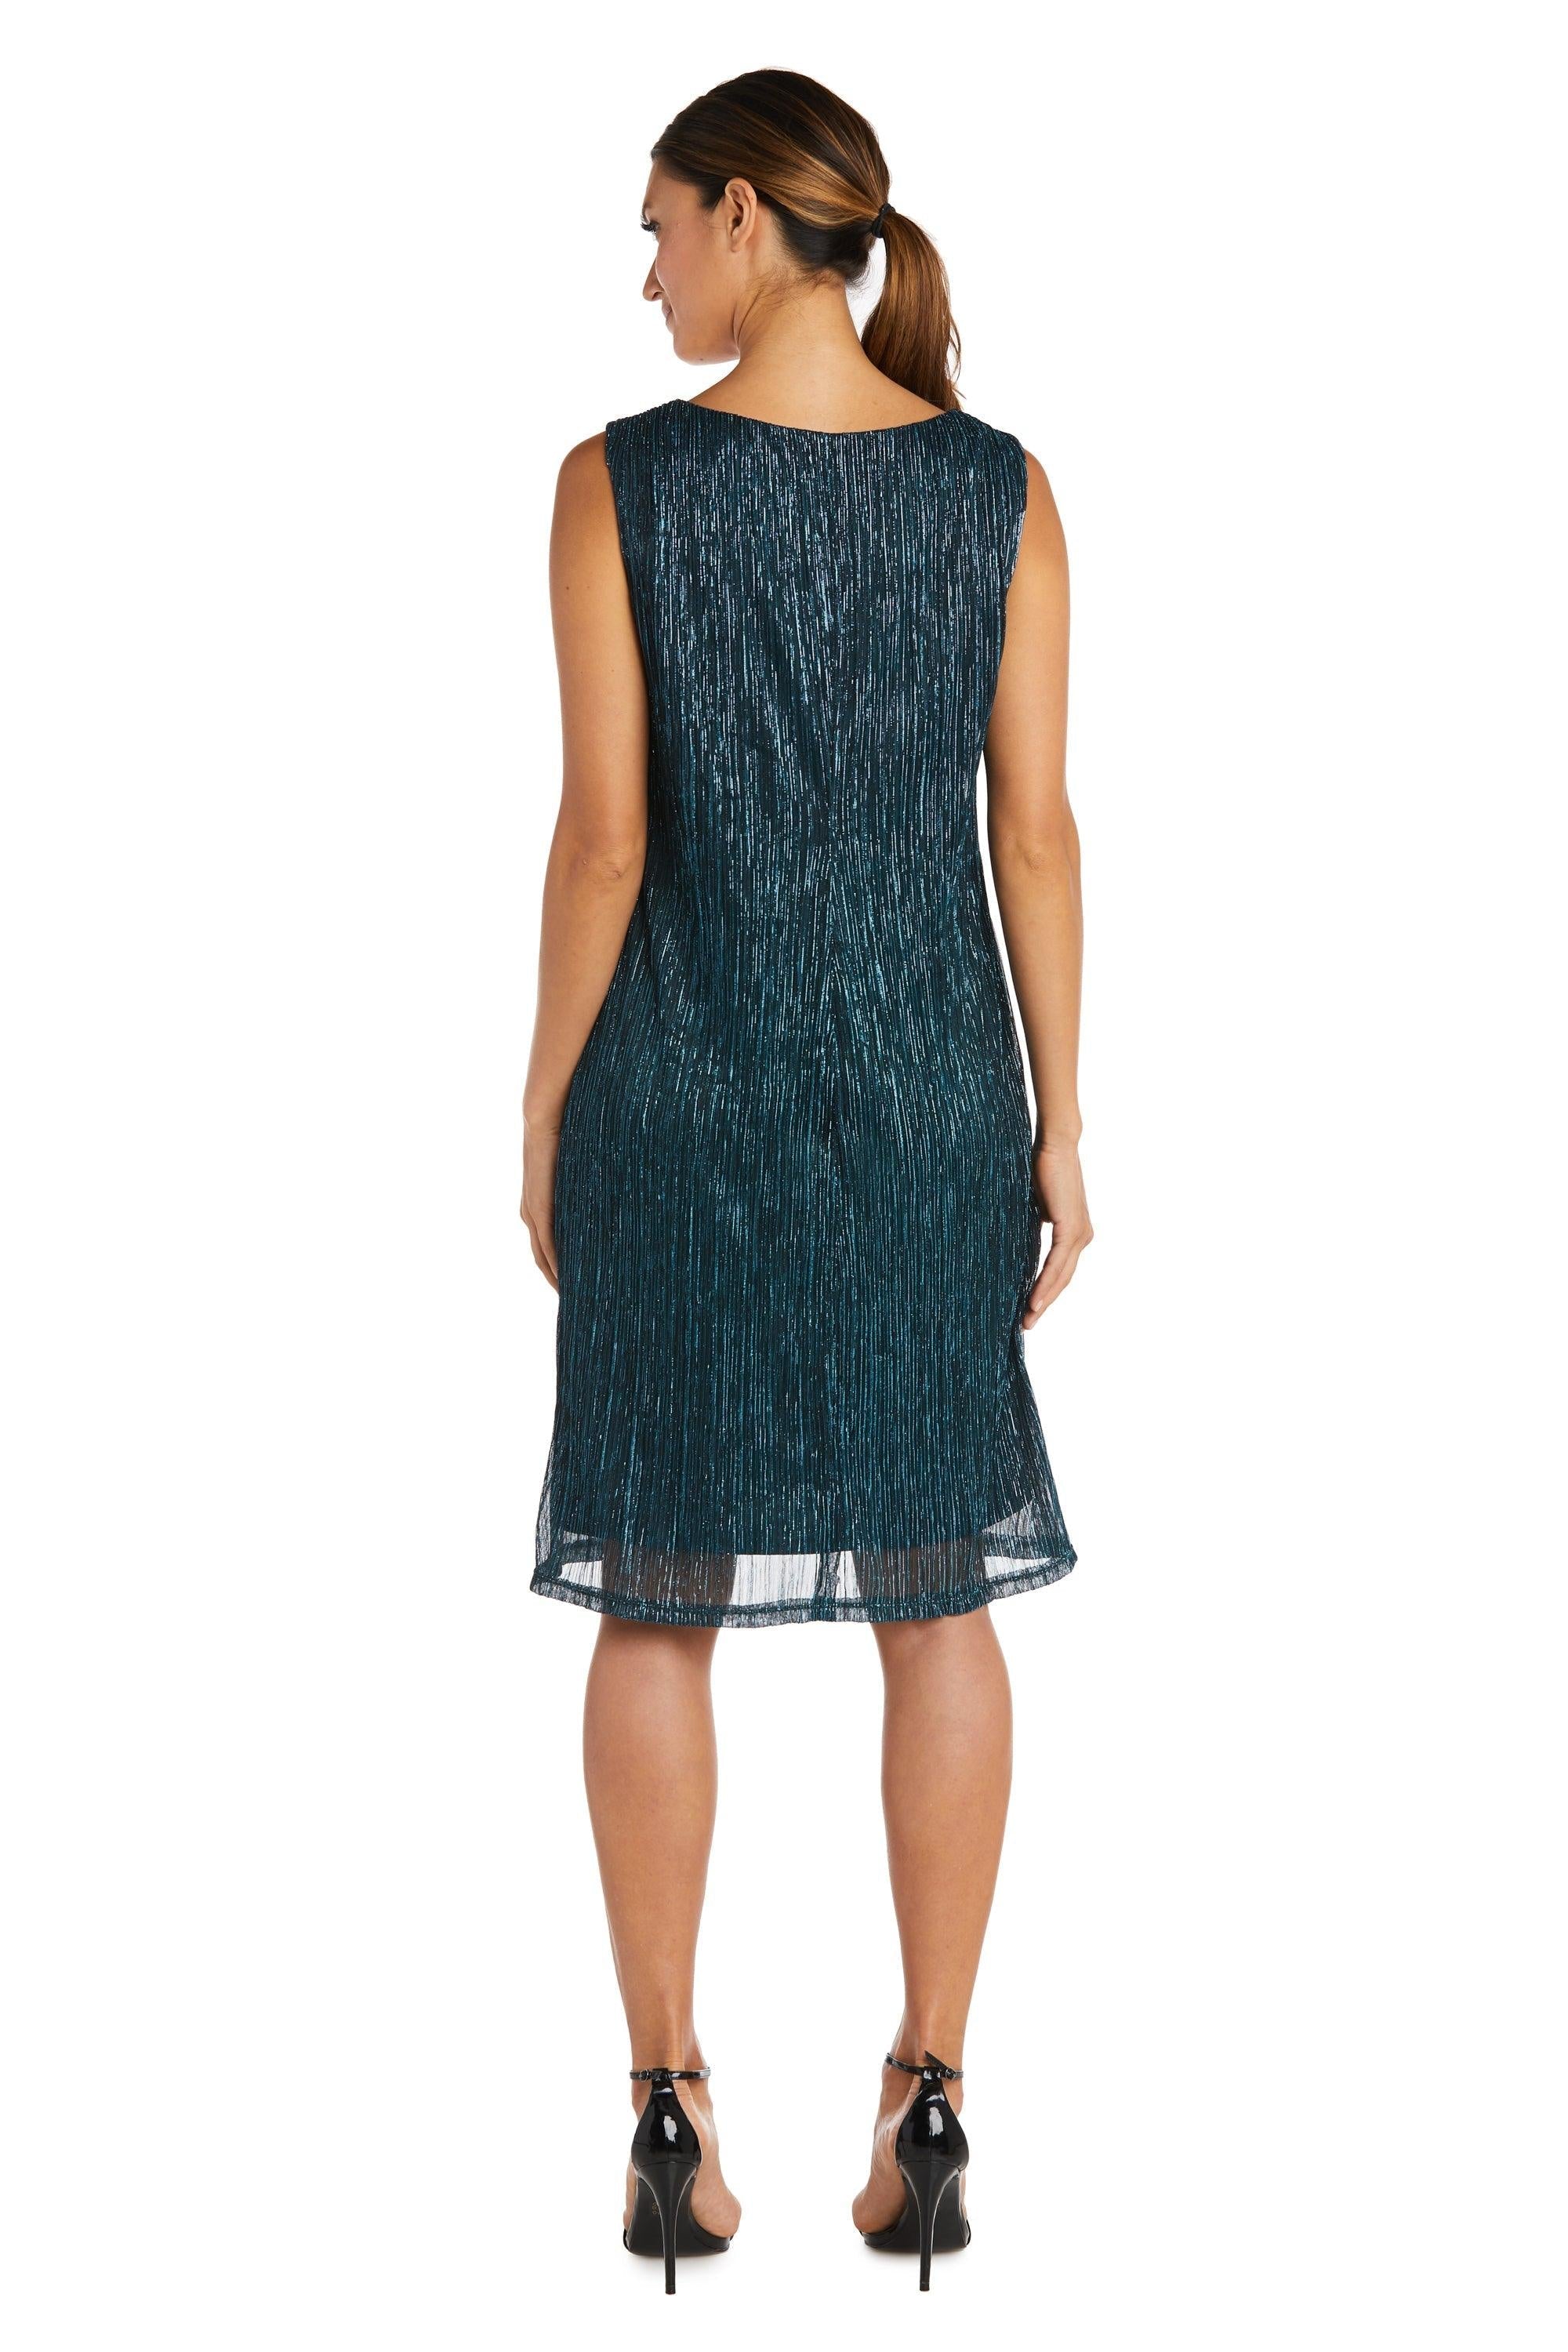 R&M Richards Short Metallic Petite Dress 5191P - The Dress Outlet